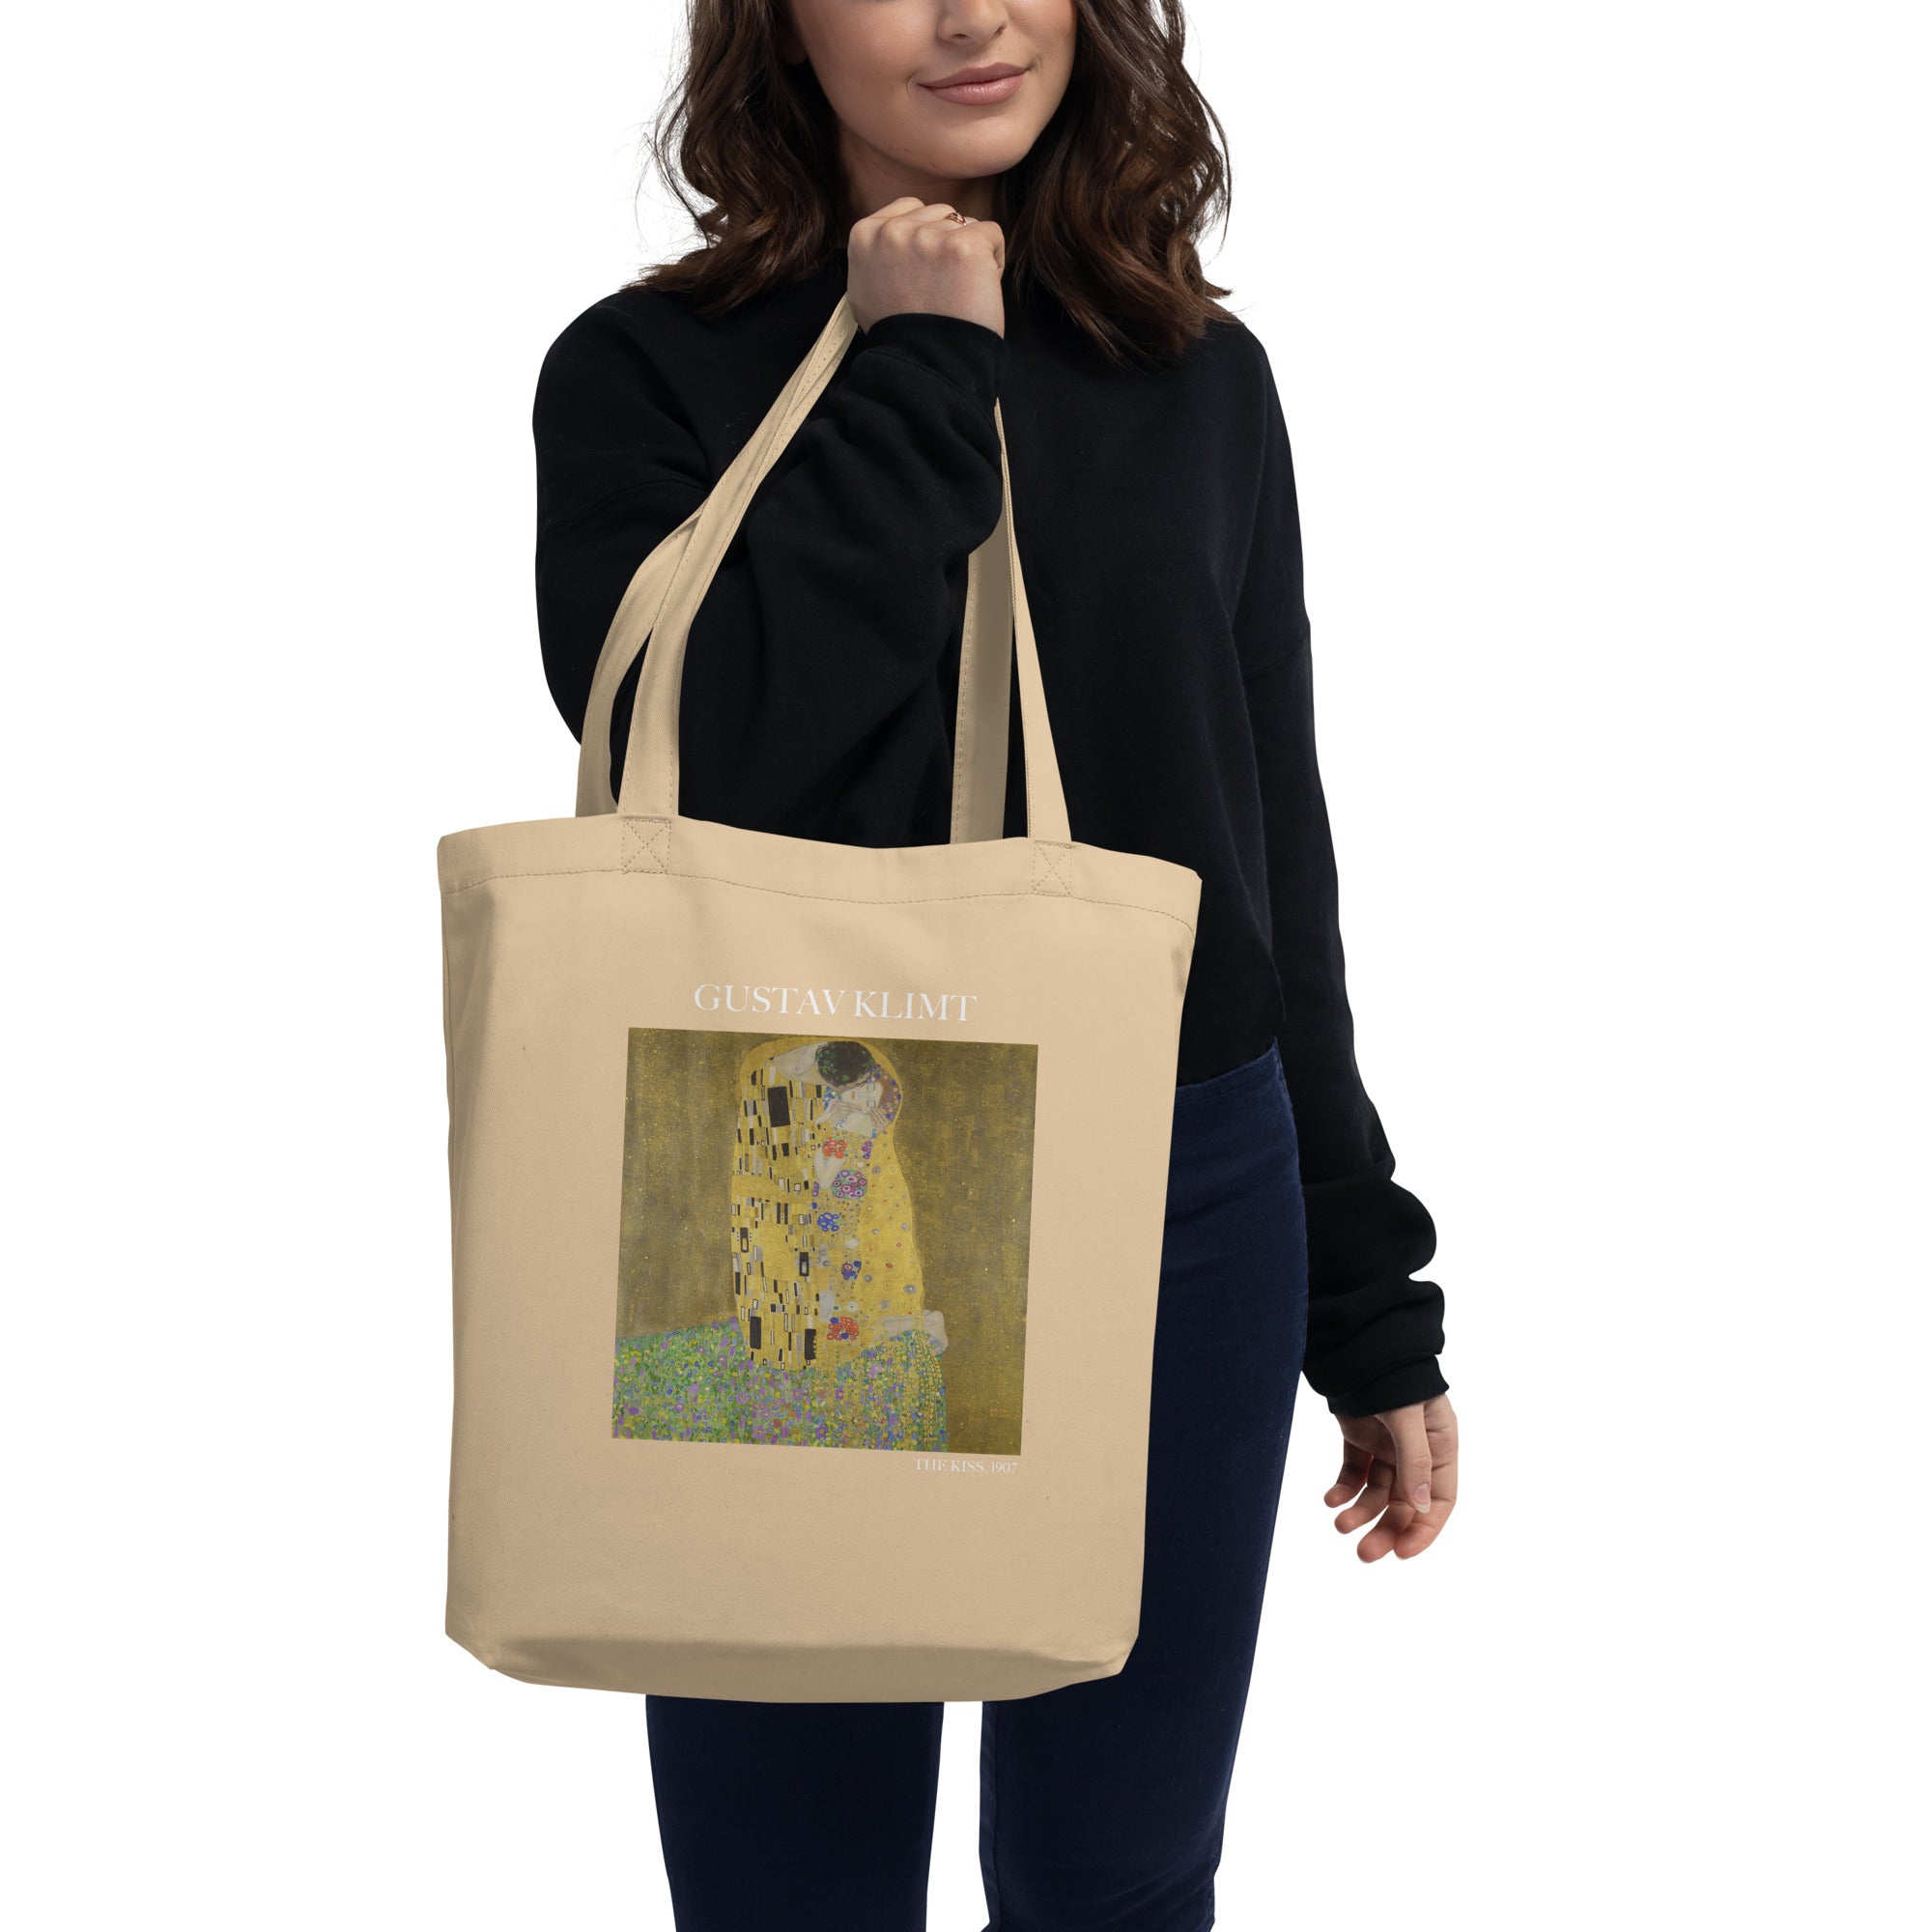 Gustav Klimt 'The Kiss' Famous Painting Totebag | Eco Friendly Art Tote Bag